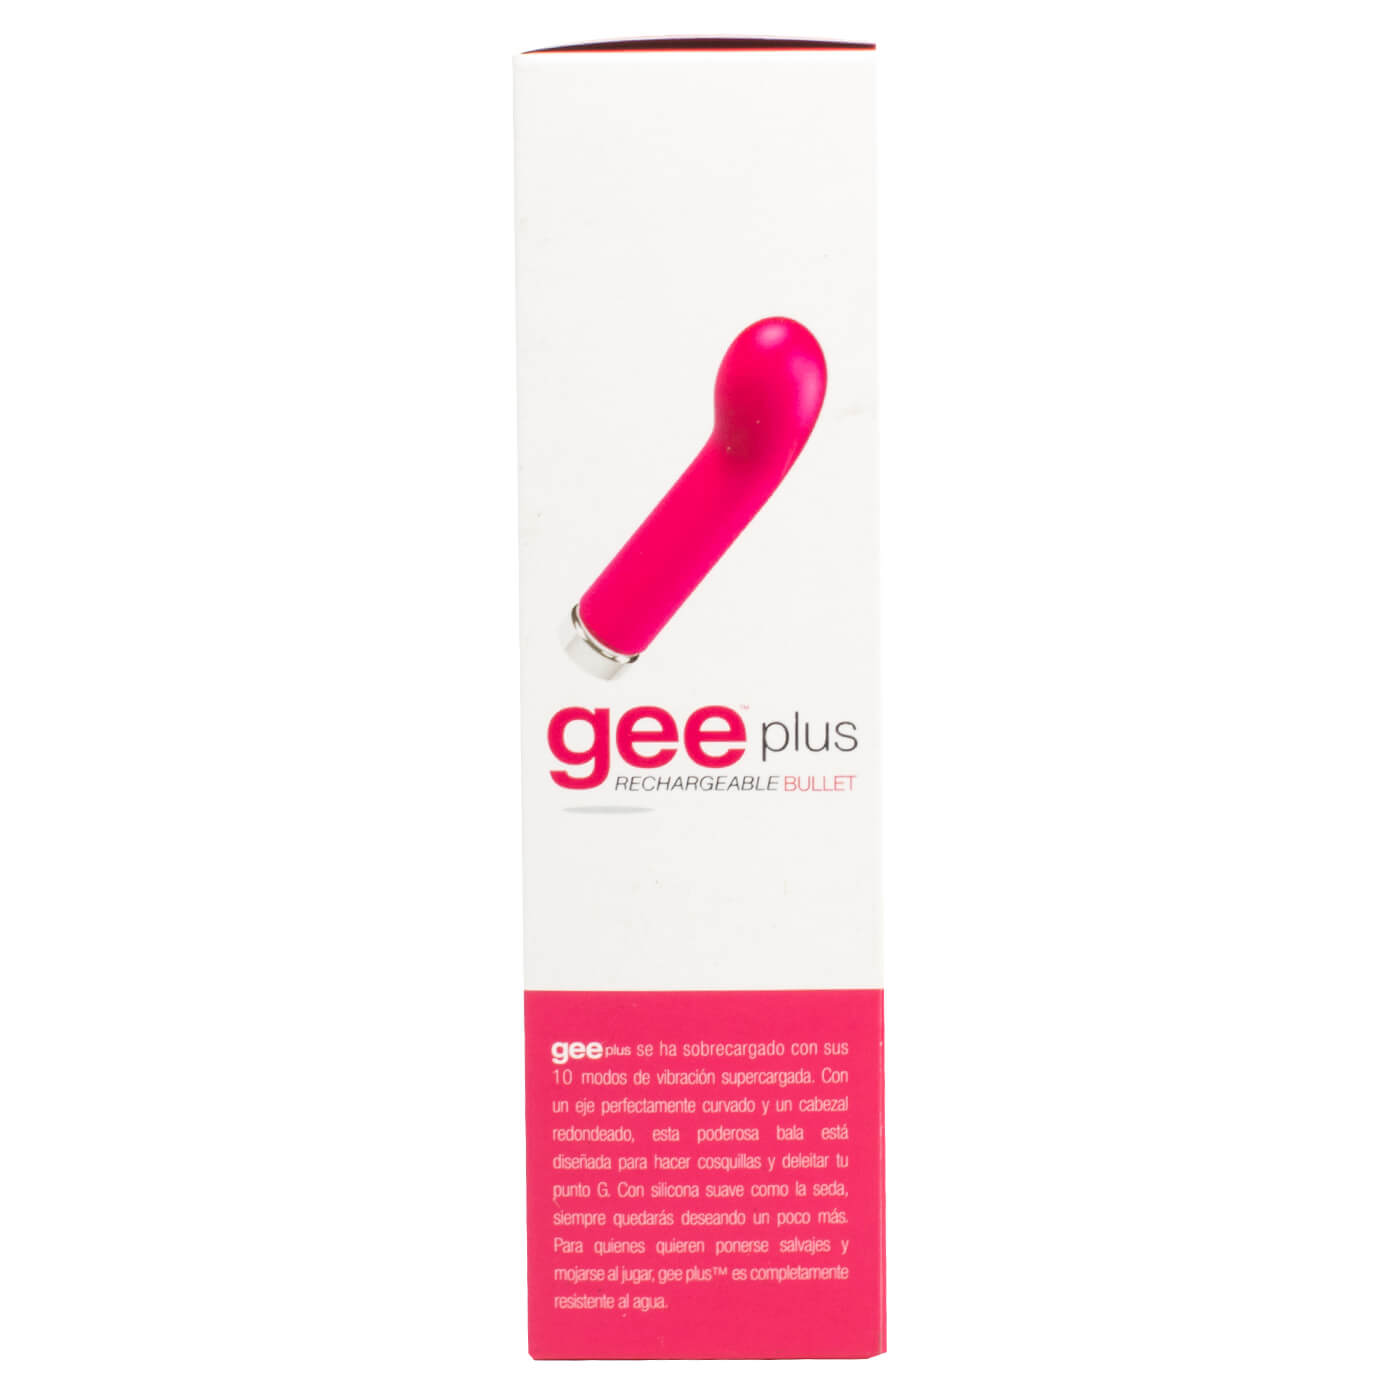 Vedo GEE Plus 10 Function Extra Quiet G-Spot Vibrator